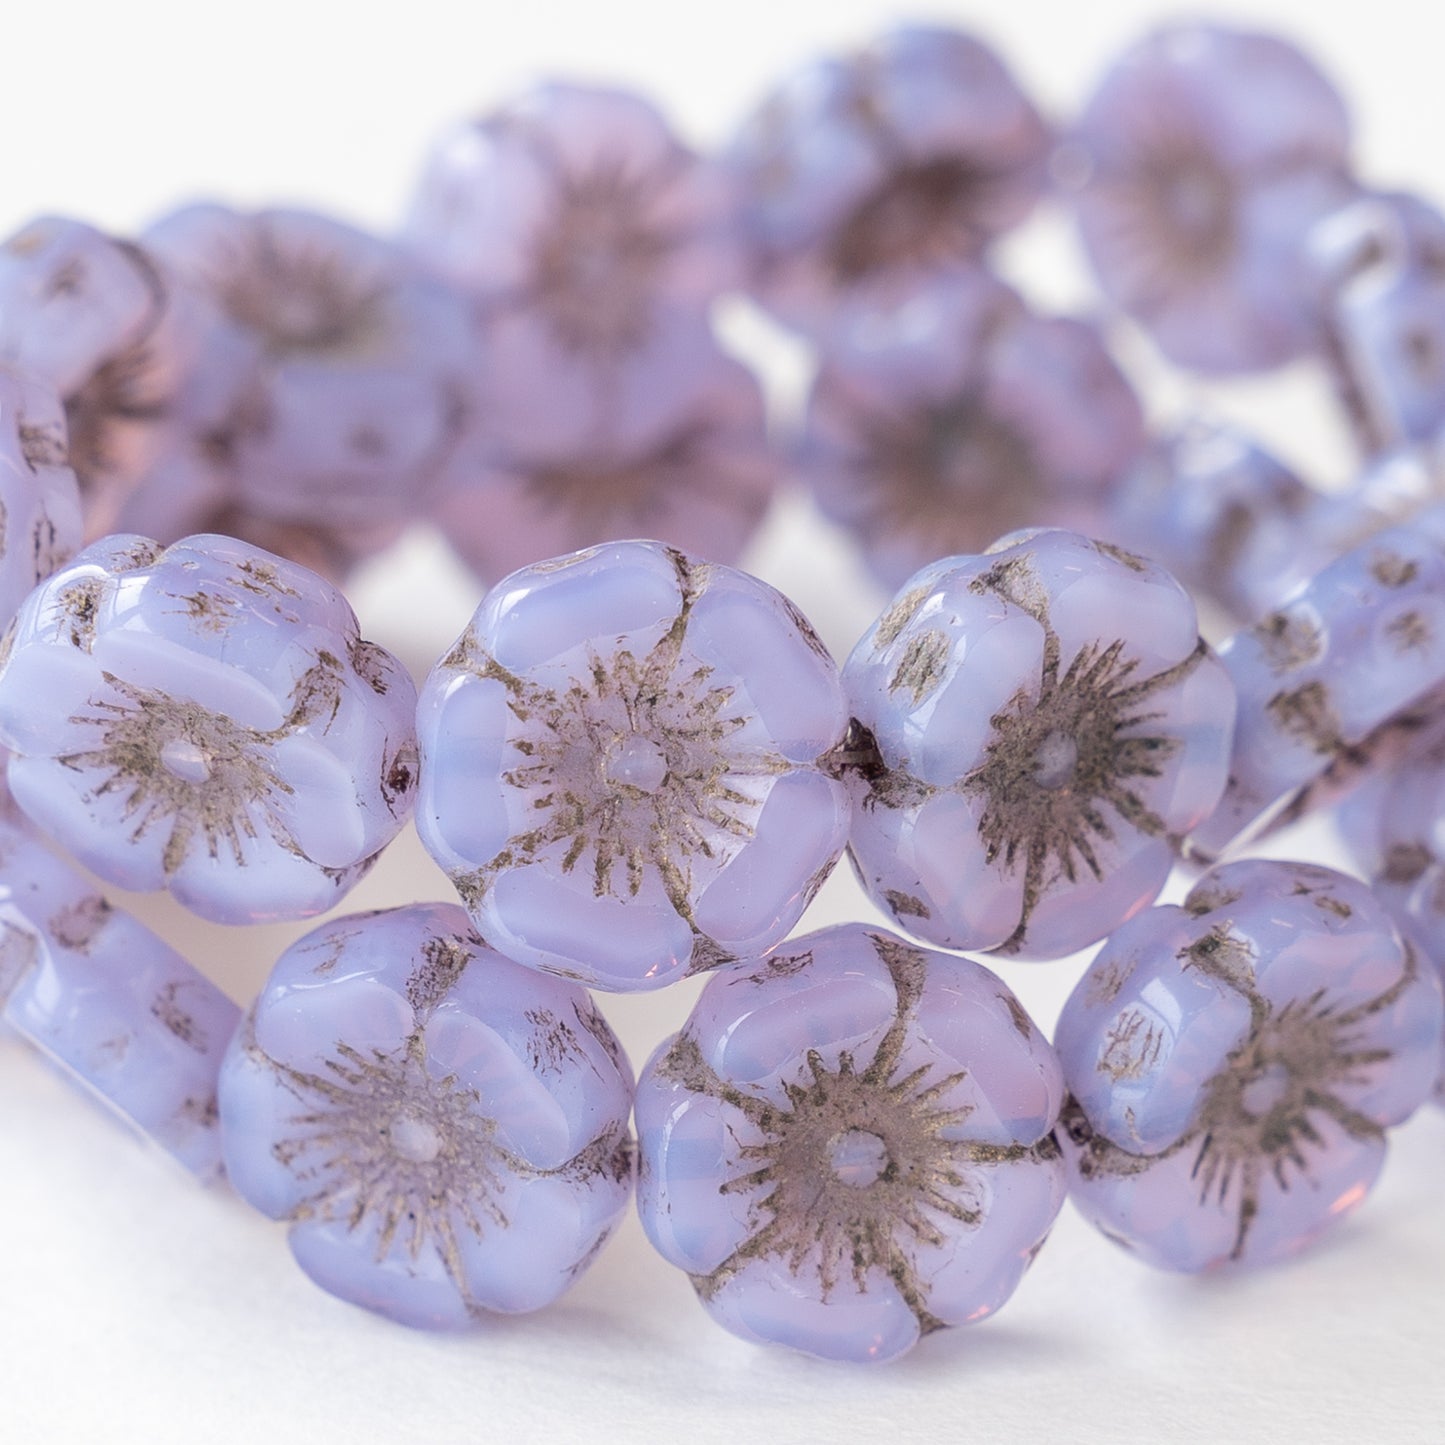 12mm Glass Flower Beads - Lavender Opaline  - 12 Beads